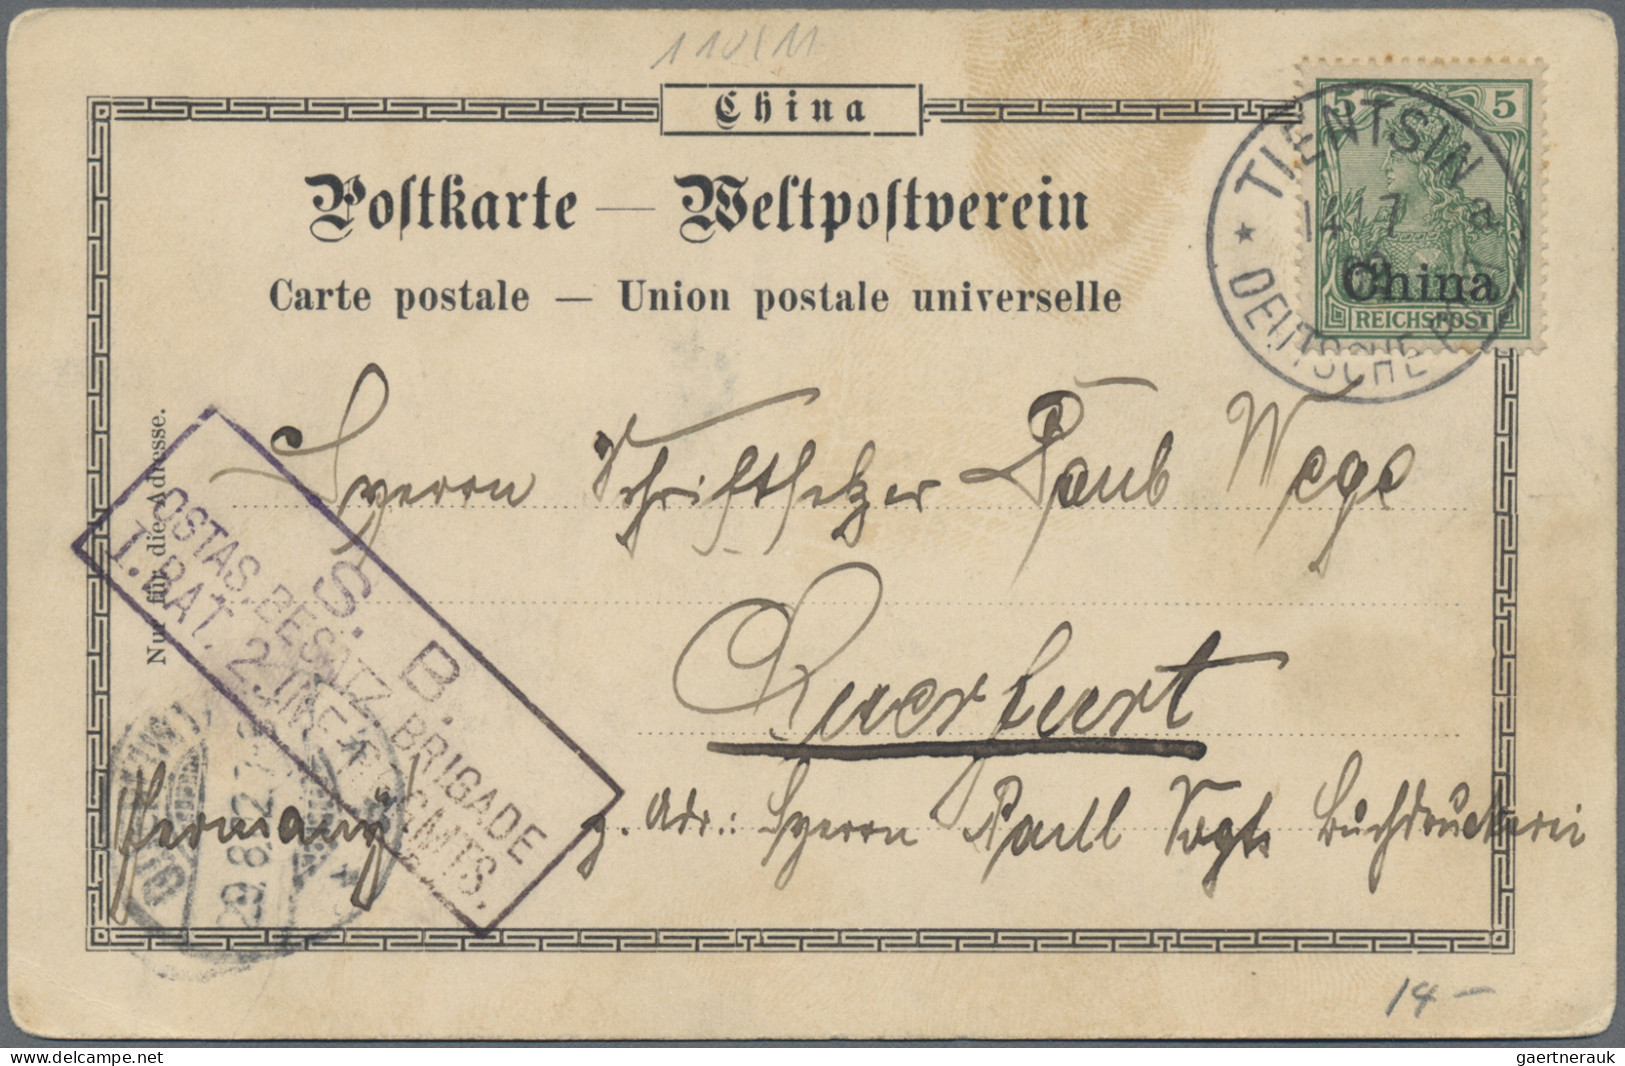 Deutsche Post in China: 1900/1913, frankierte Karten ab Tientsin (8), Peking (4,